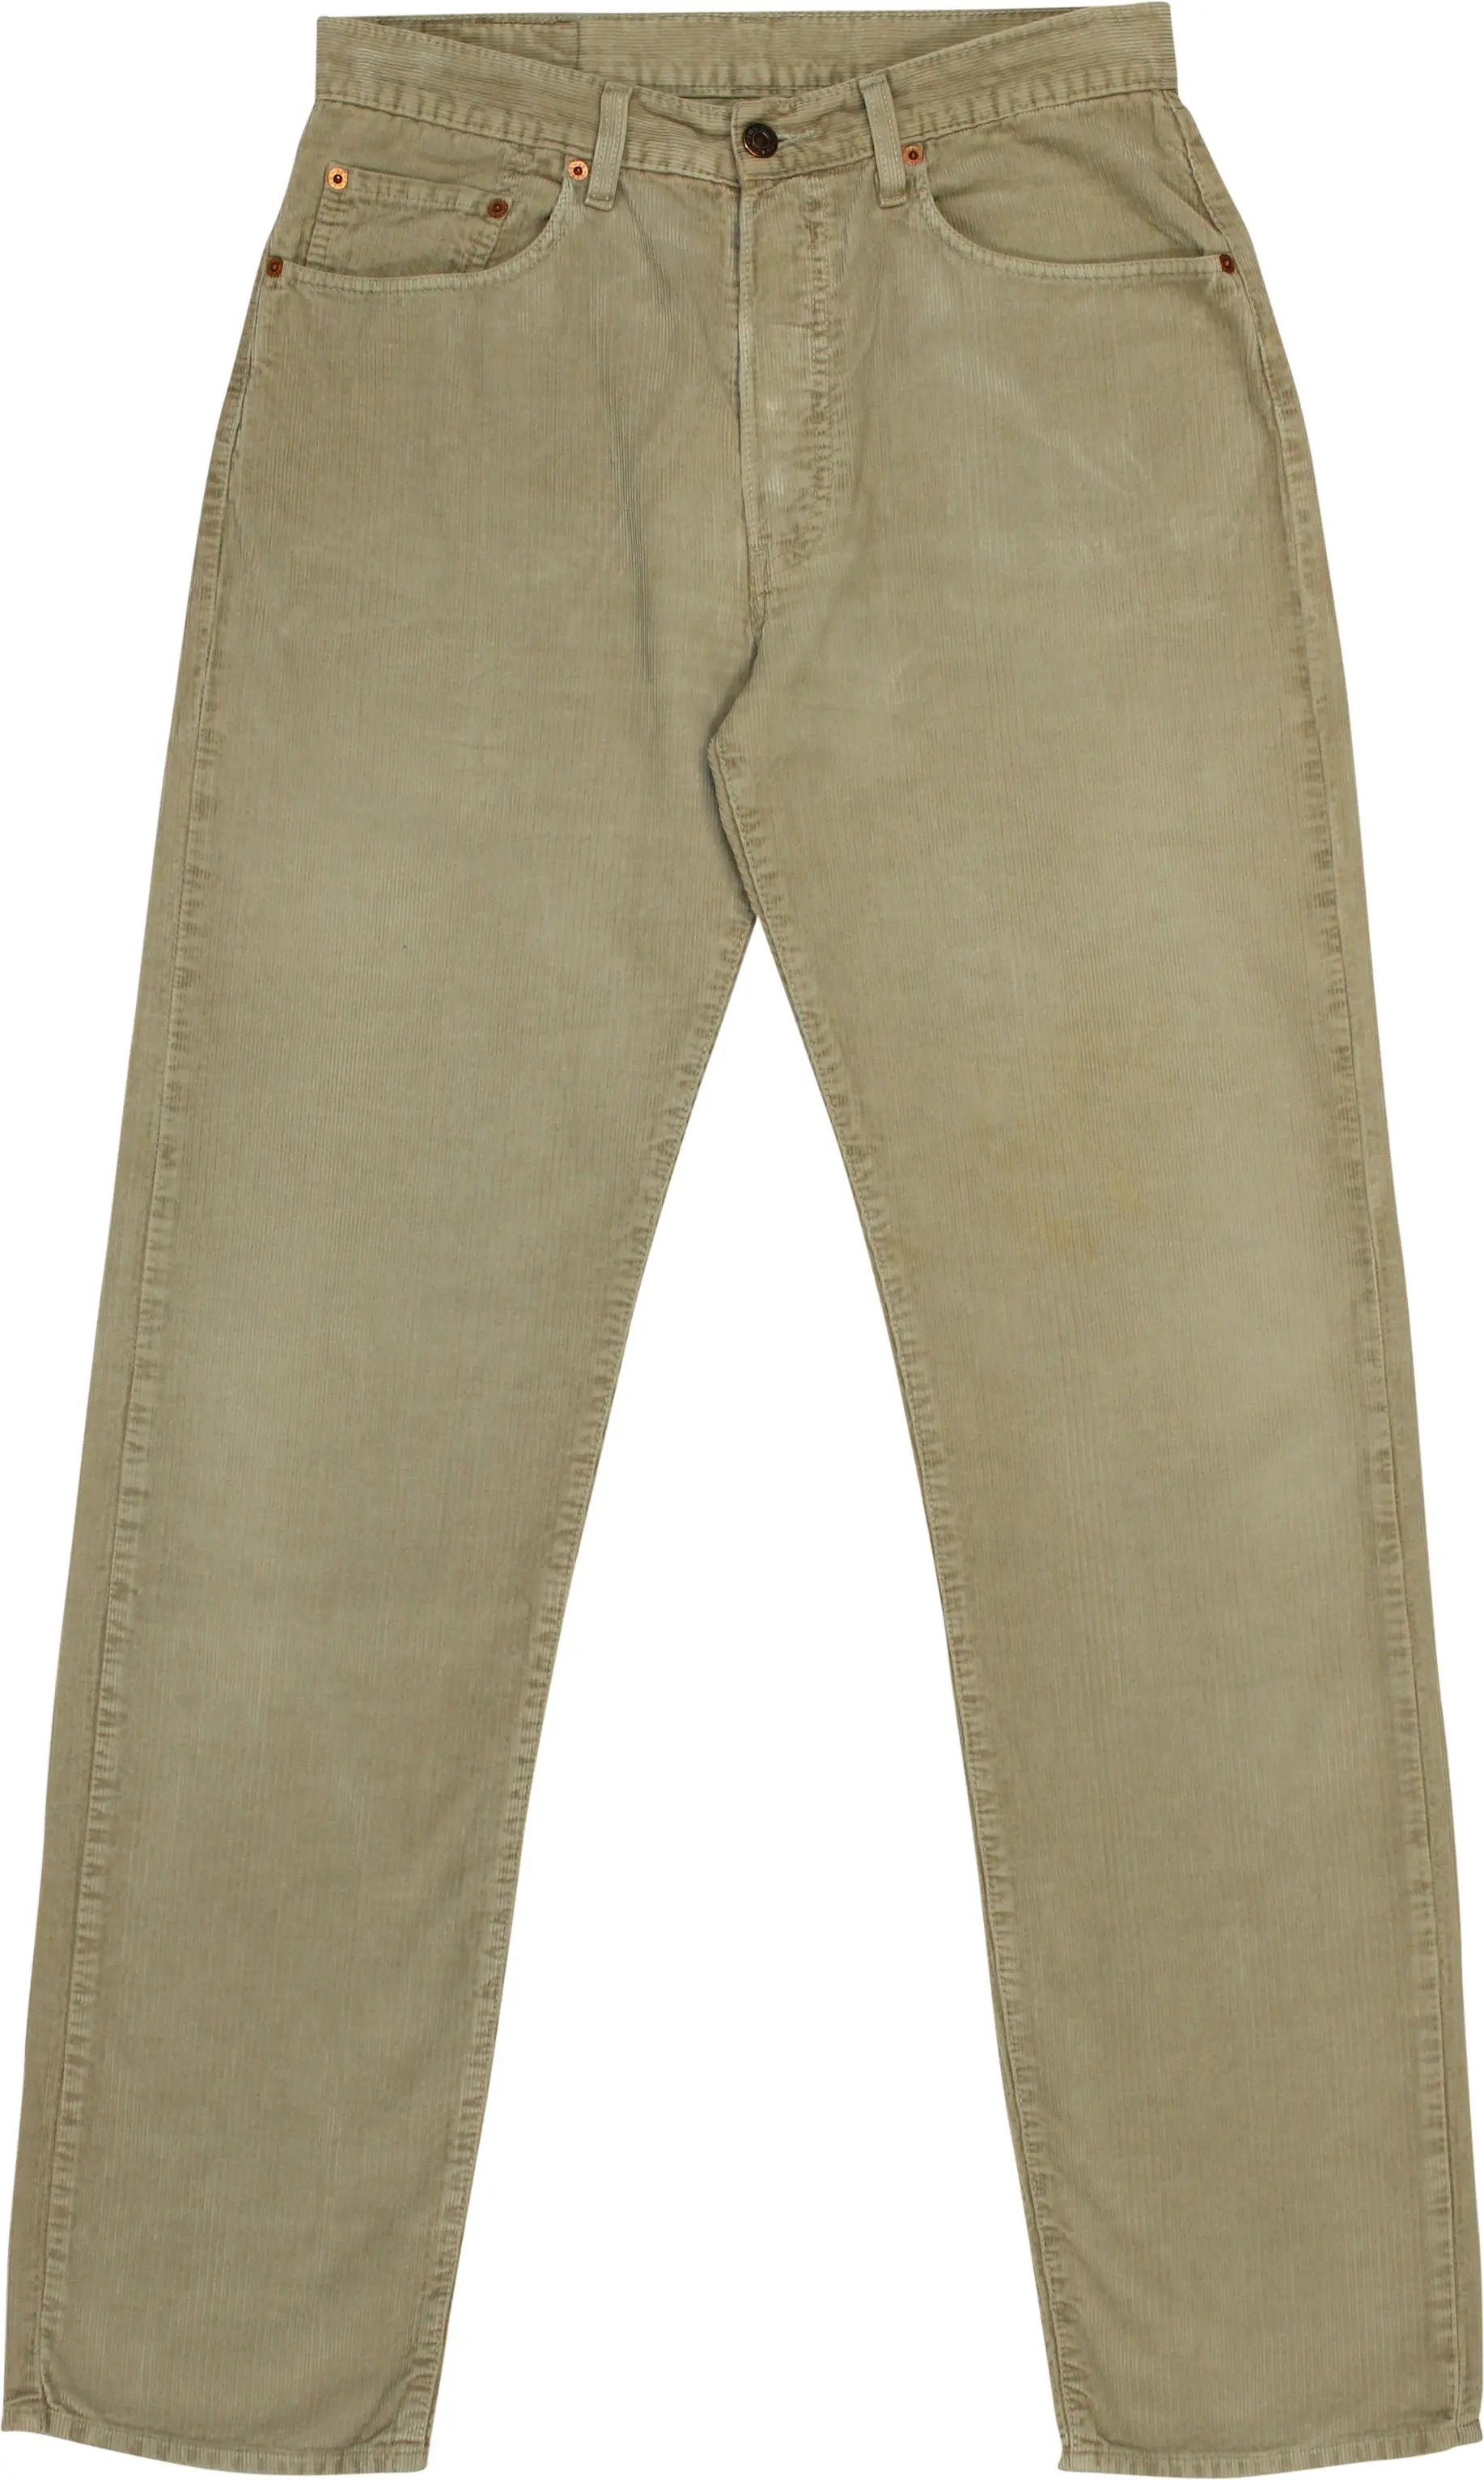 Levi's - Vintage Levi's 551 Corduroy Pants- ThriftTale.com - Vintage and second handclothing